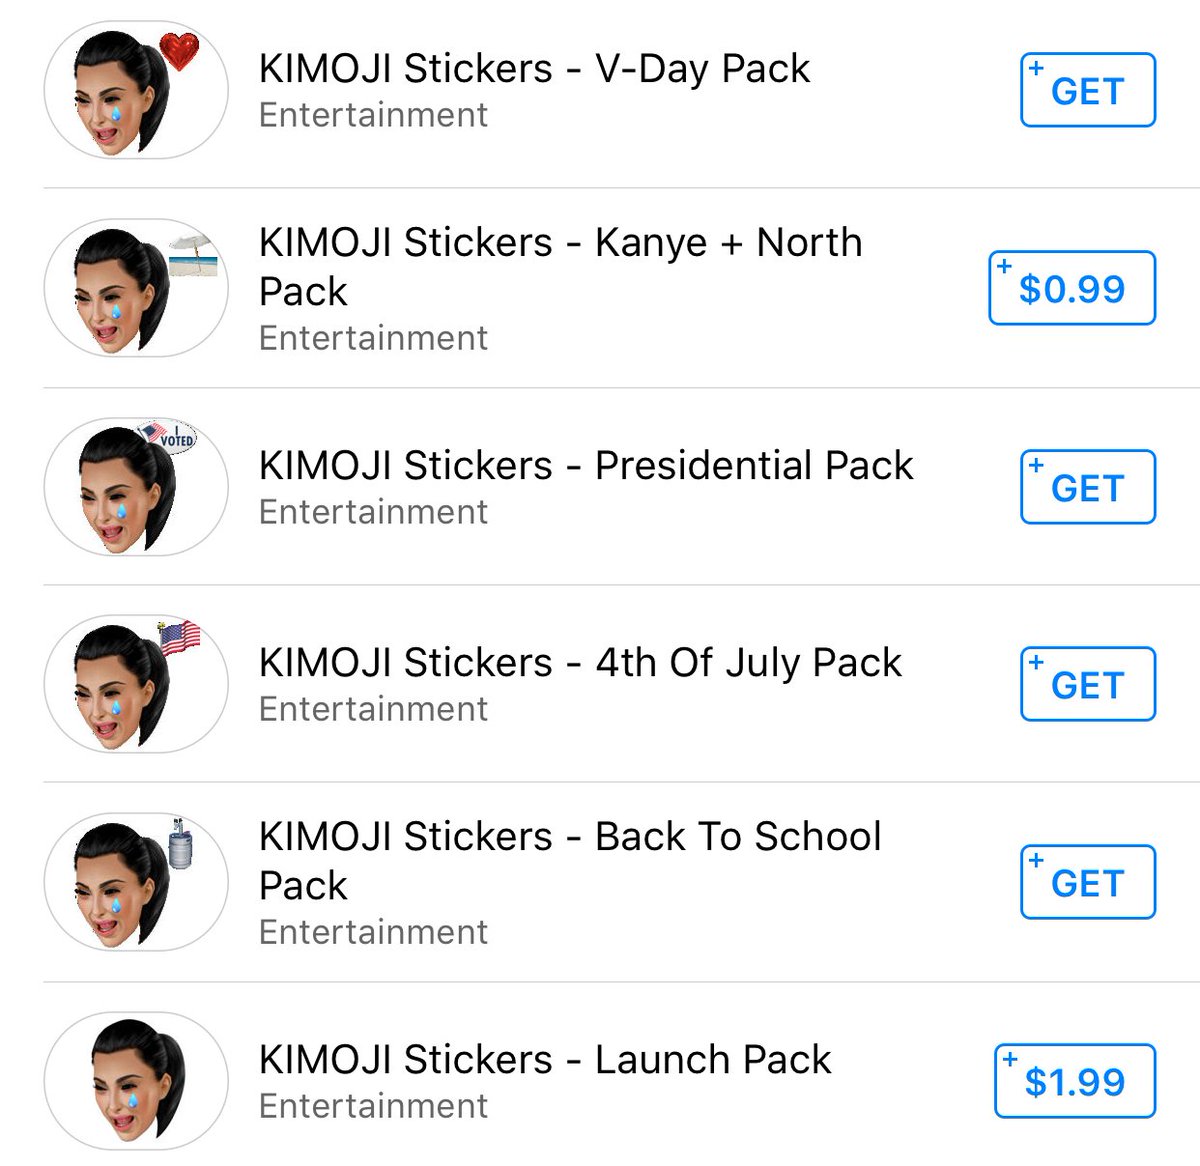 KIMOJI UPDATE! Update to iOS 10 & get all 6 KIMOJI sticker packs in the iMessage App Store! https://t.co/Ww1X1koG9Z https://t.co/I0gQl8do5f